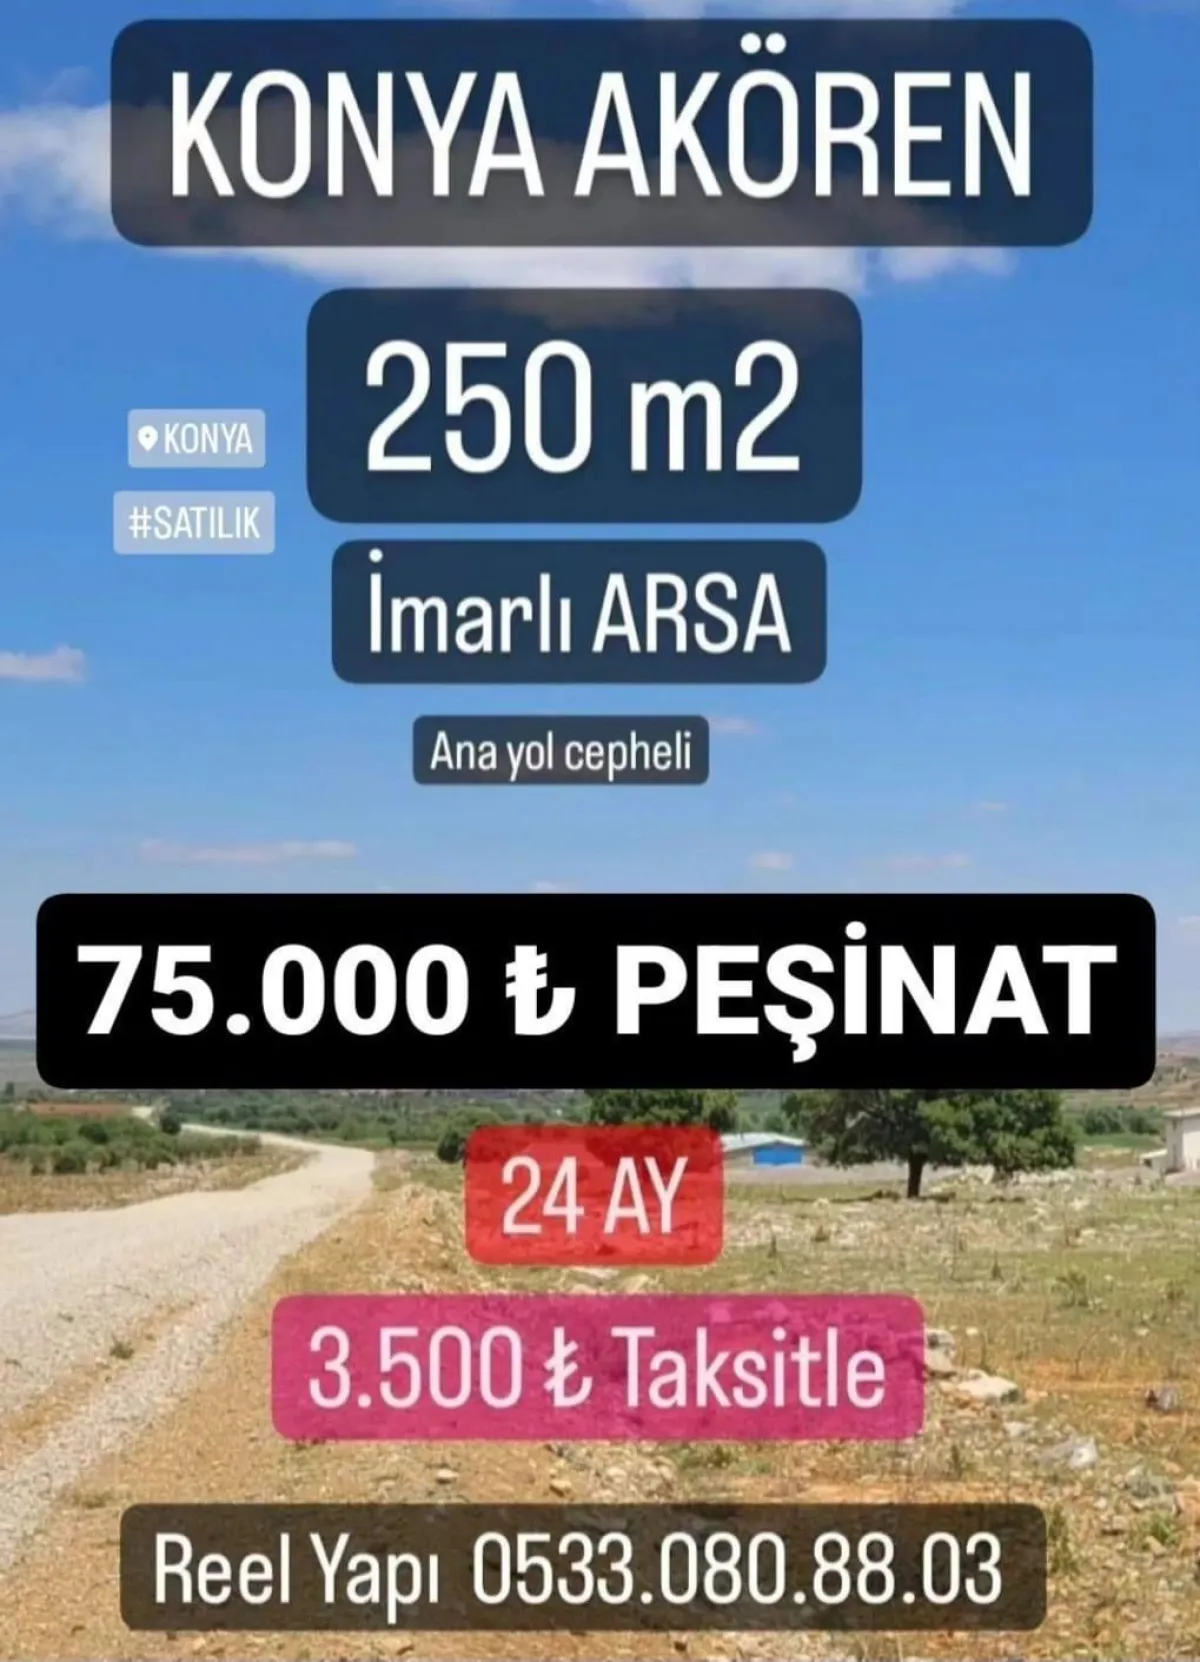 Konya "AKÖREN" 24 Ay TAKSiT'le IMARLI ARSA'lar